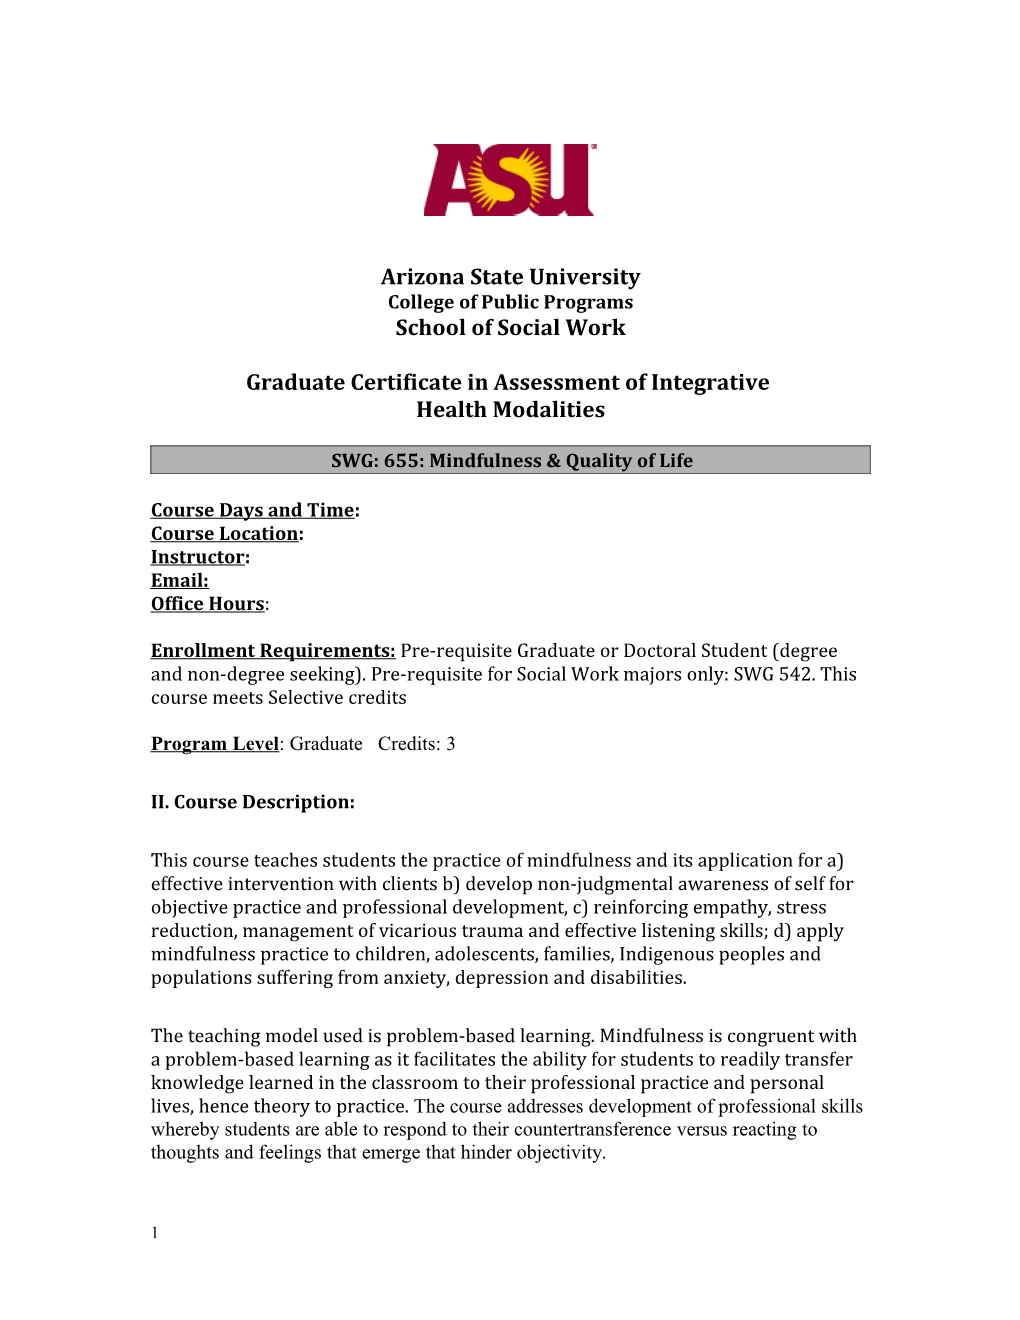 Graduate Certificate in Assessment of Integrative